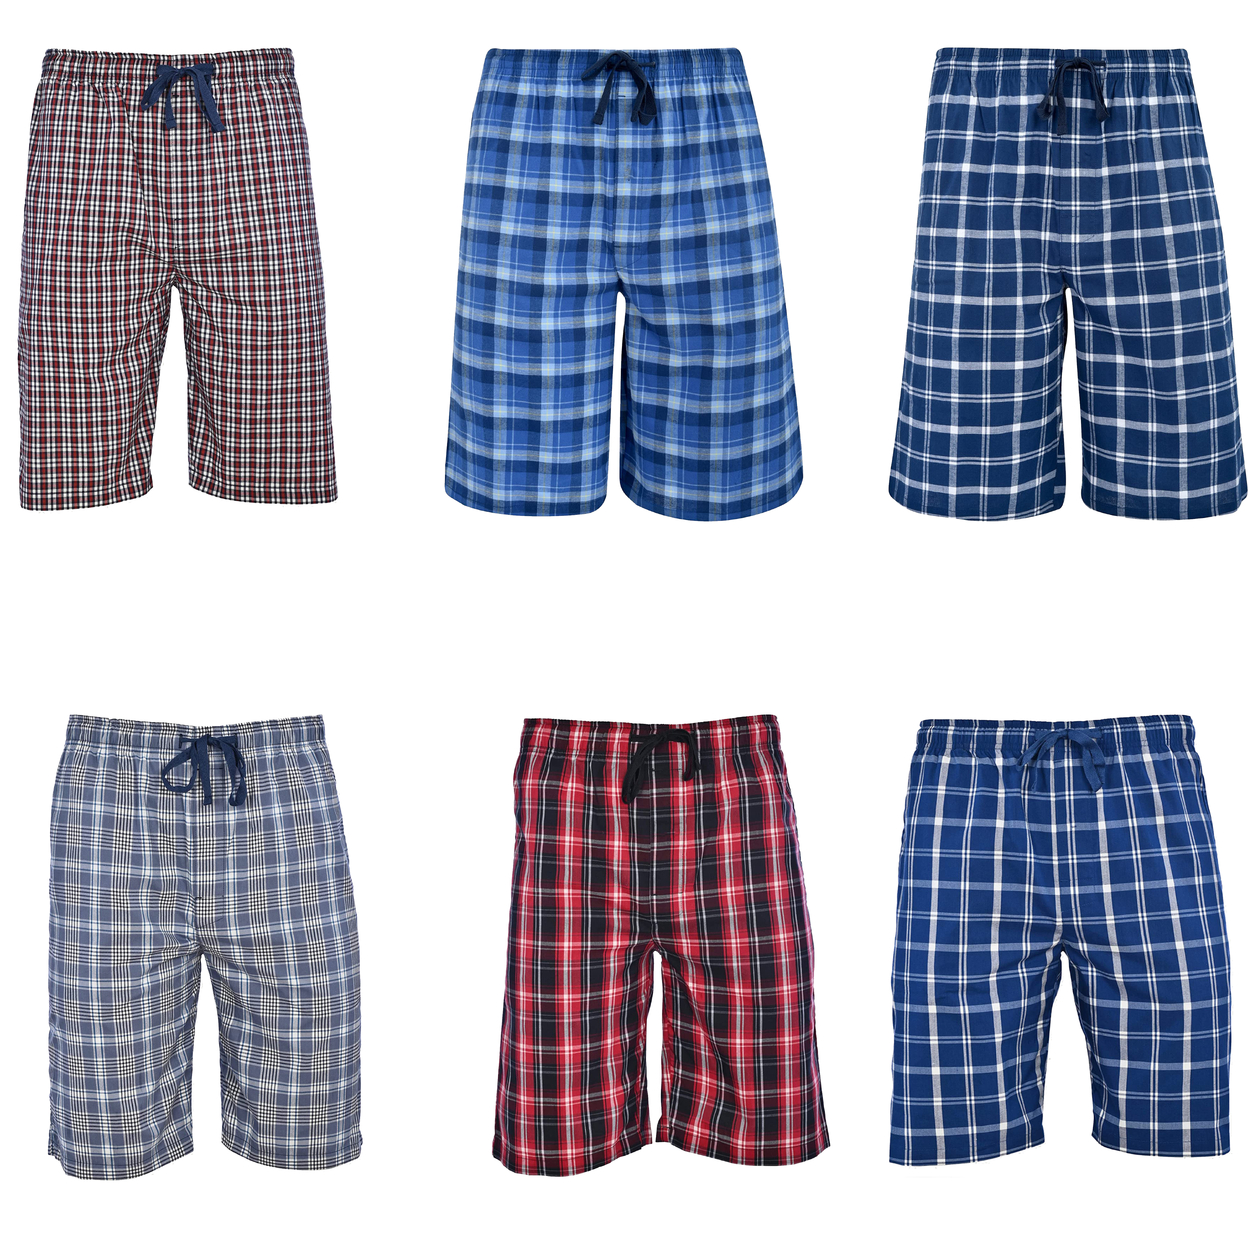 2-Pack: Men's Ultra Soft Plaid Lounge Pajama Sleep Wear Shorts - Grey & Grey, Small